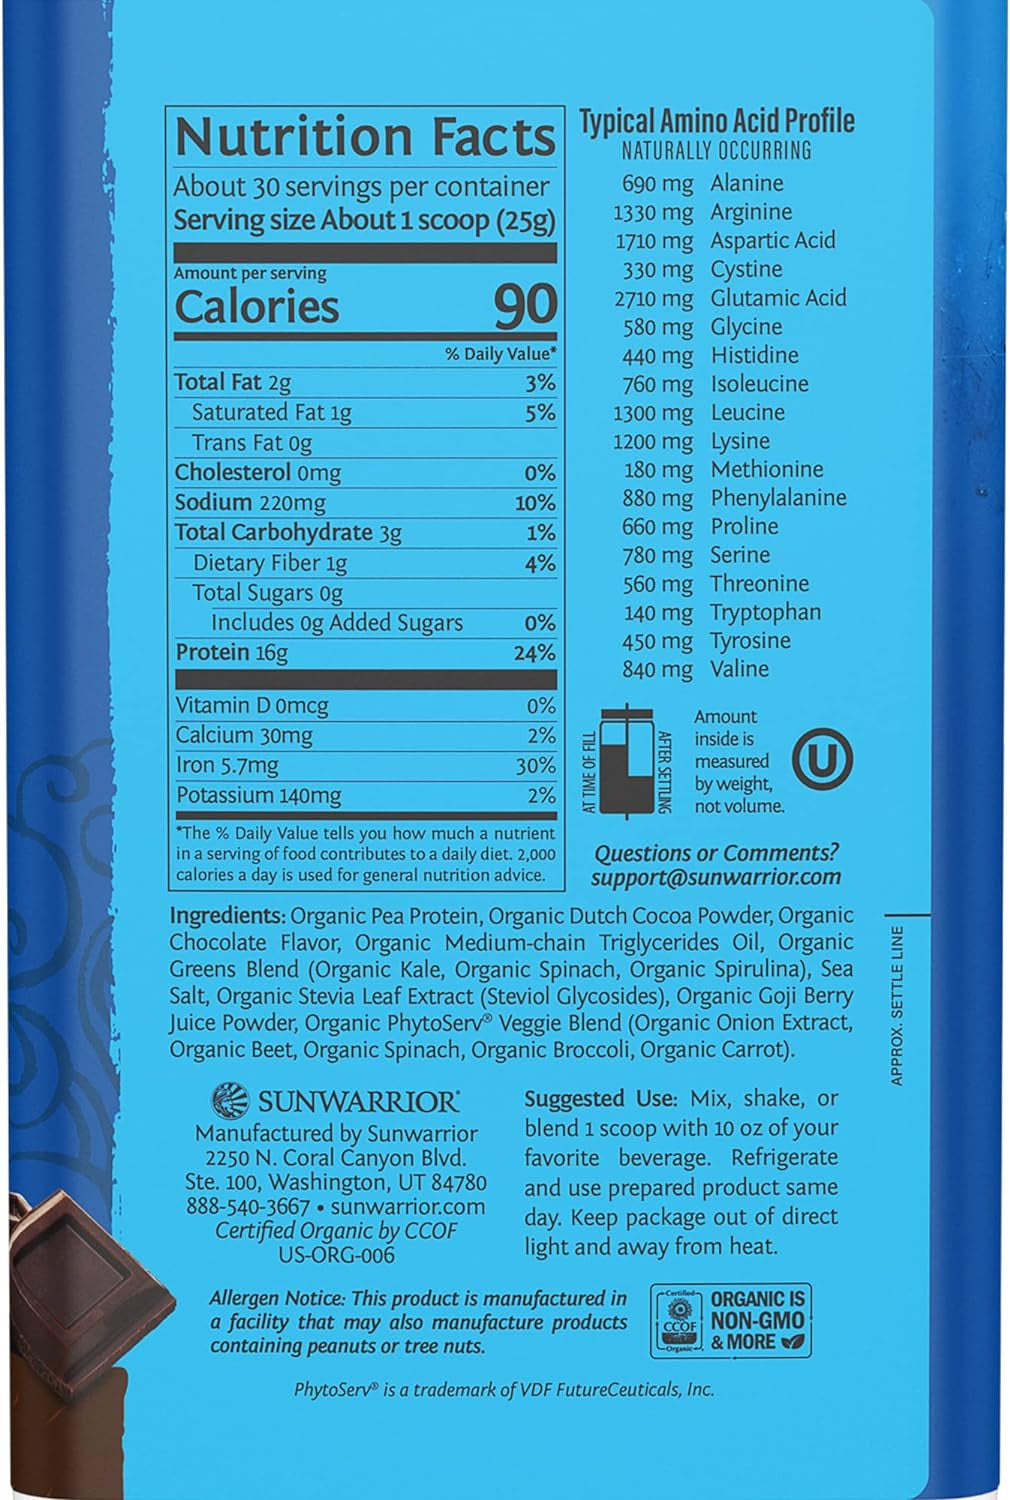 Sunwarrior Warrior Blend Protein Greens Powder Drink Mix | BCAA Plant Based Organic Hemp Seed Vegan Gluten Free Non-Gmo Low Carb Protein Powder | Chocolate 750 G 30 SRV